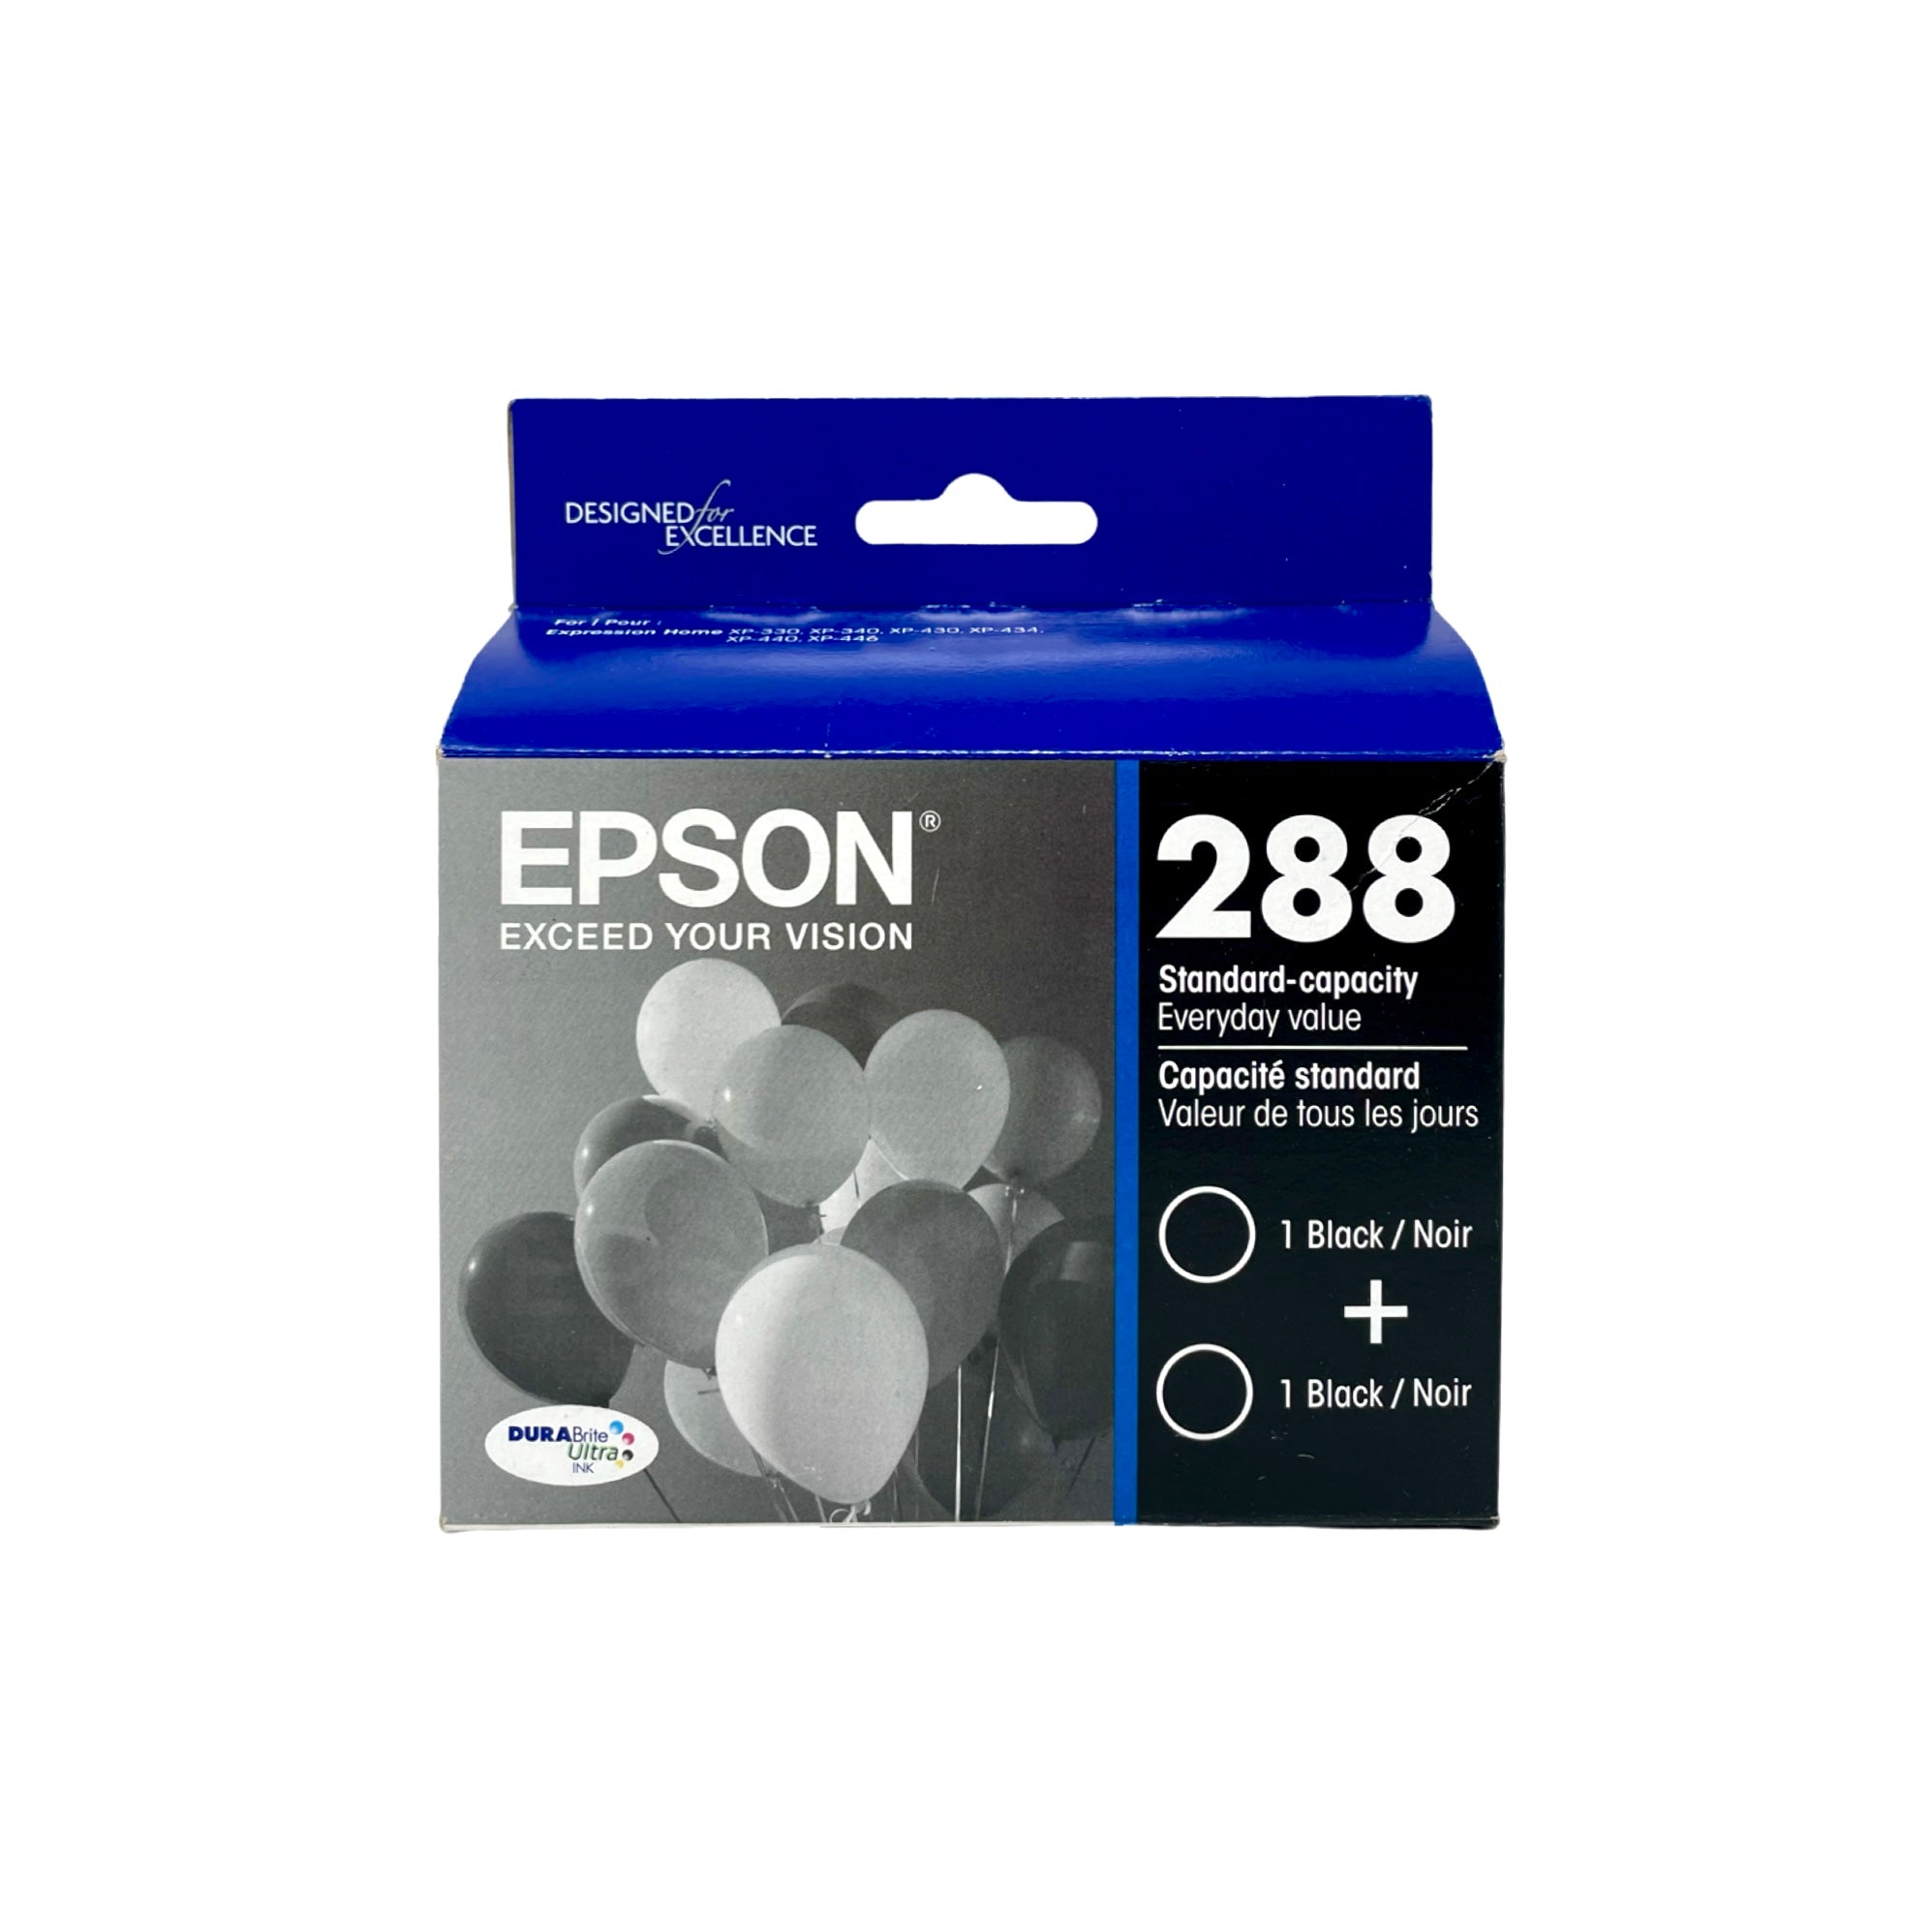 Genuine Epson 288 Black Cartridges, Standard, 2/Pack (T288120-D2)